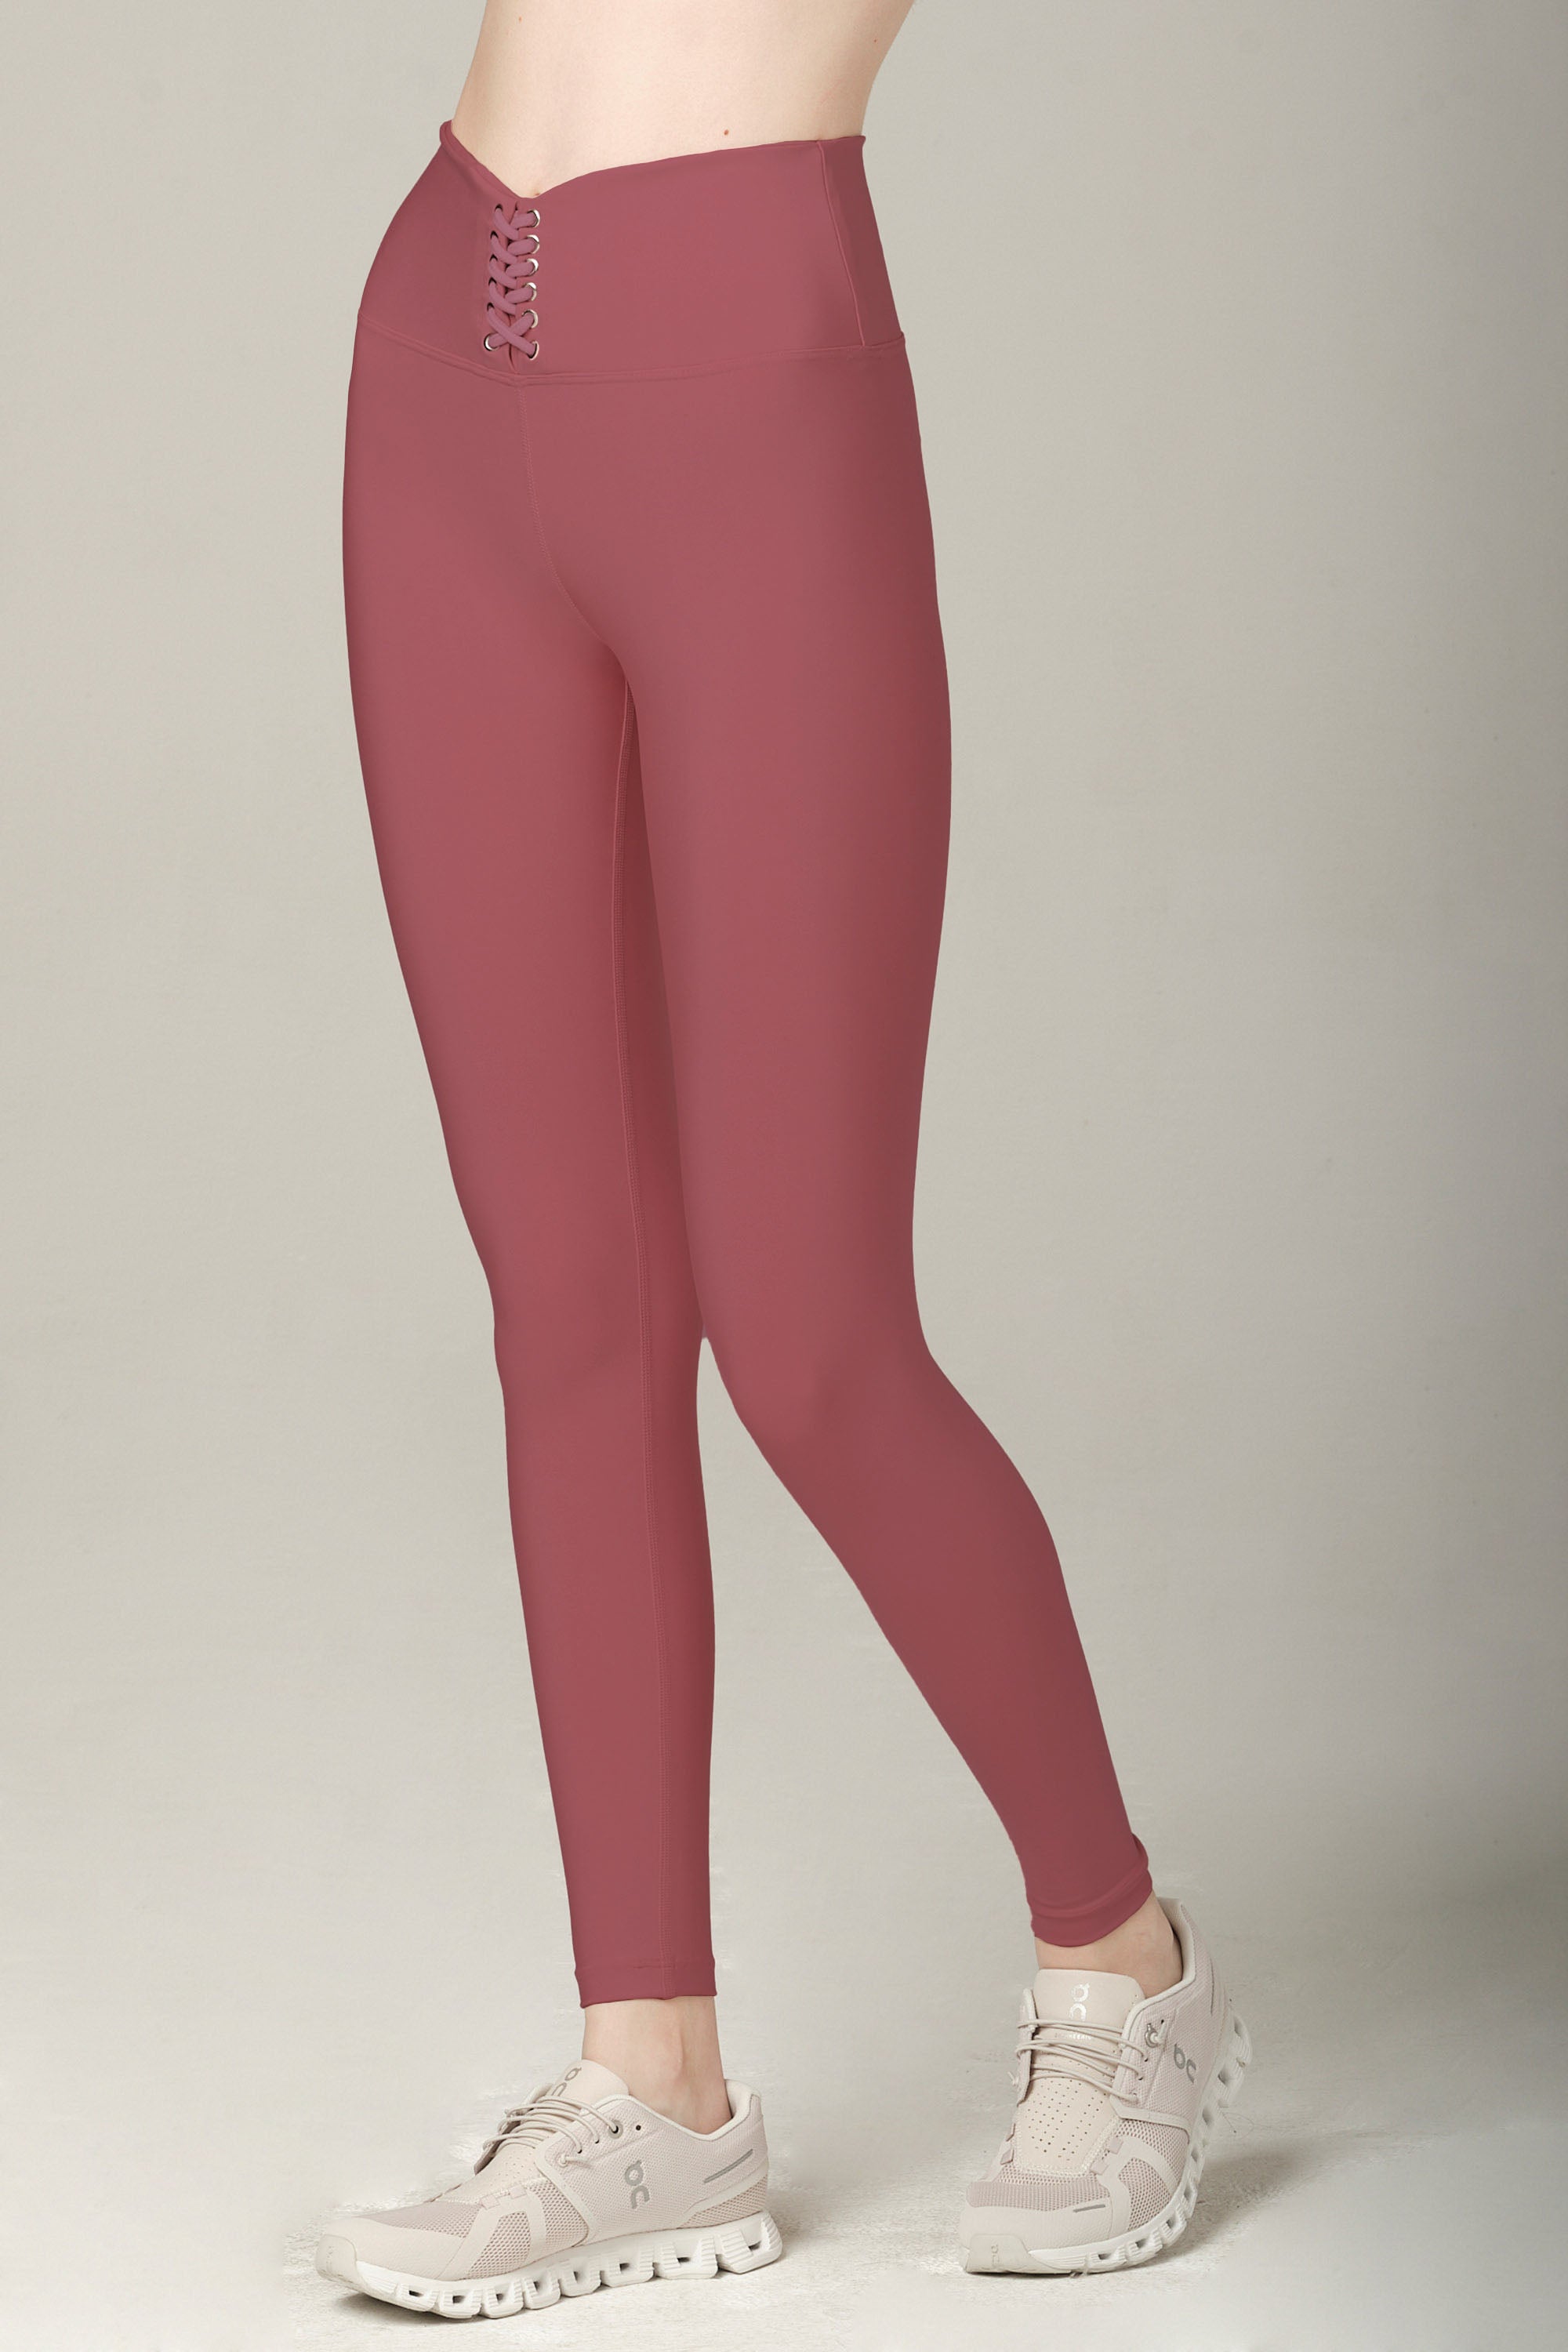 RESTOCKS 2  Elevate Petite Pants in Rose Mauve - ShopperBoard